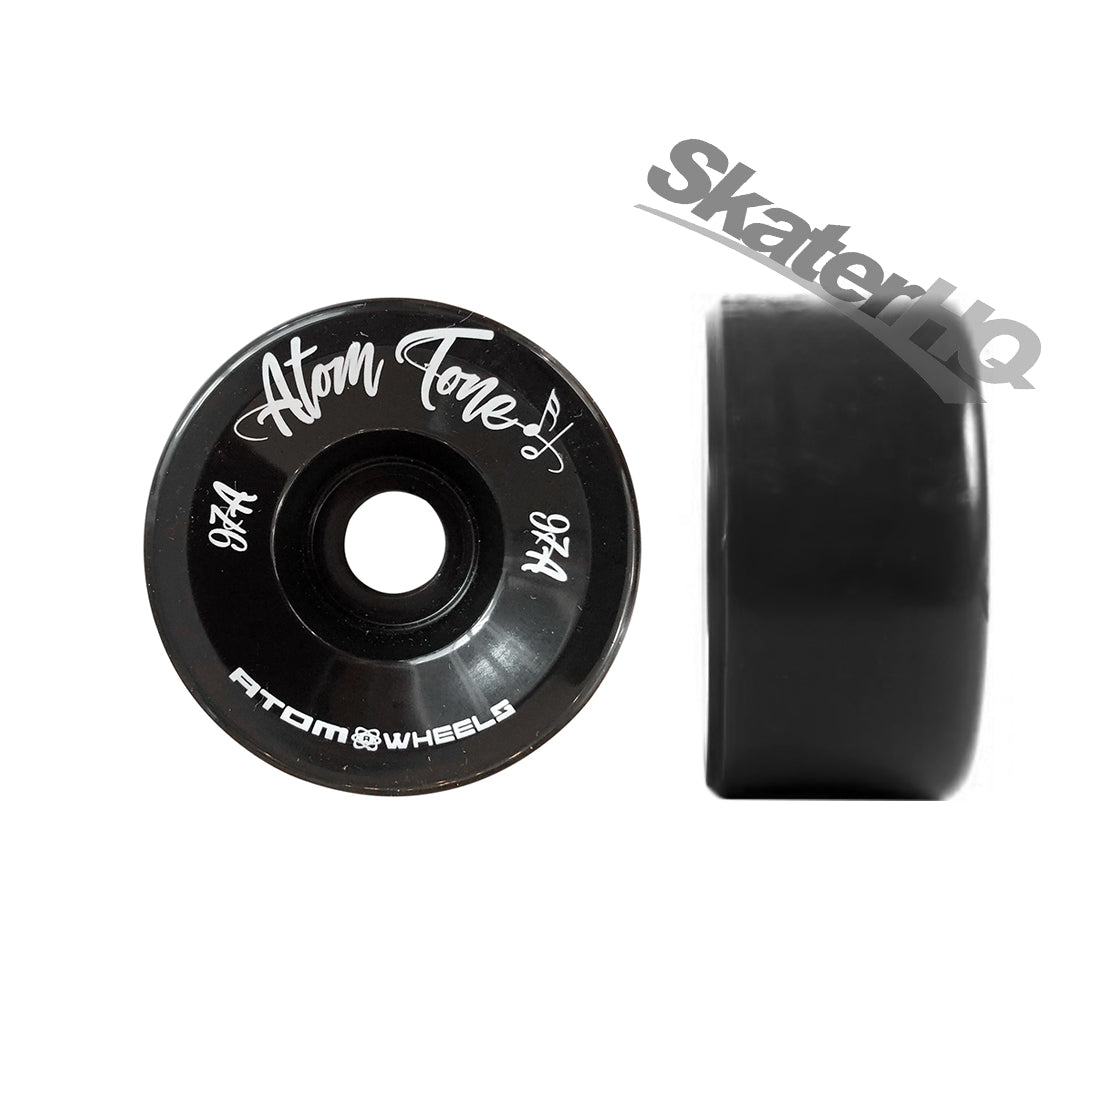 Atom Tone 57x32mm/97a 4pk - Black Roller Skate Wheels